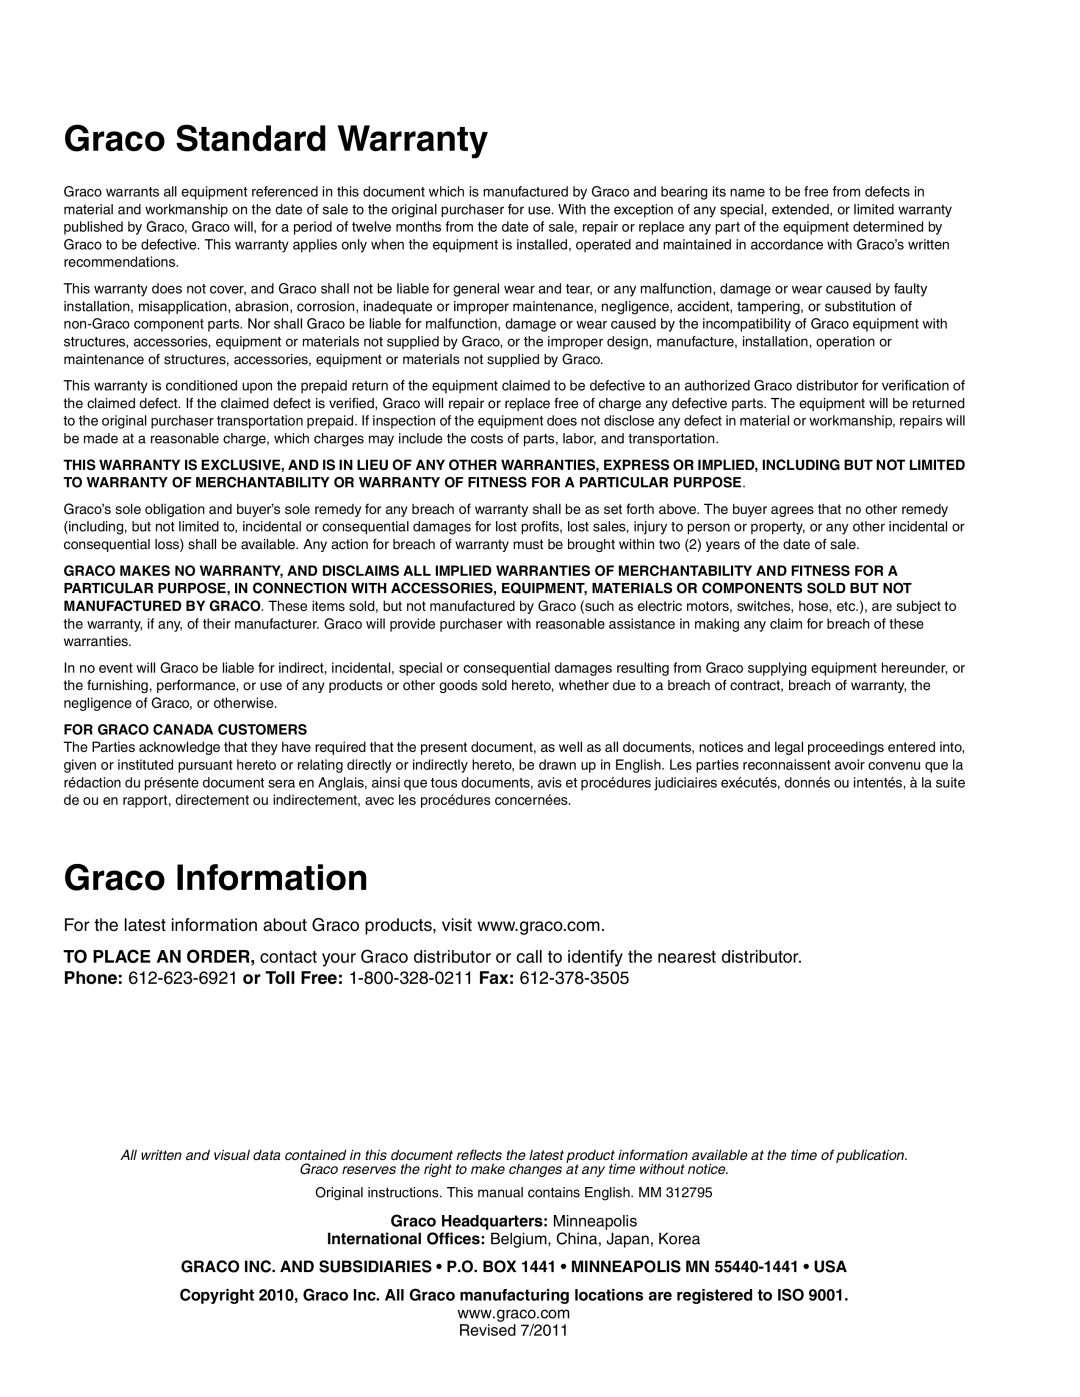 Merkury Innovations 312795E important safety instructions Graco Standard Warranty, Graco Information 